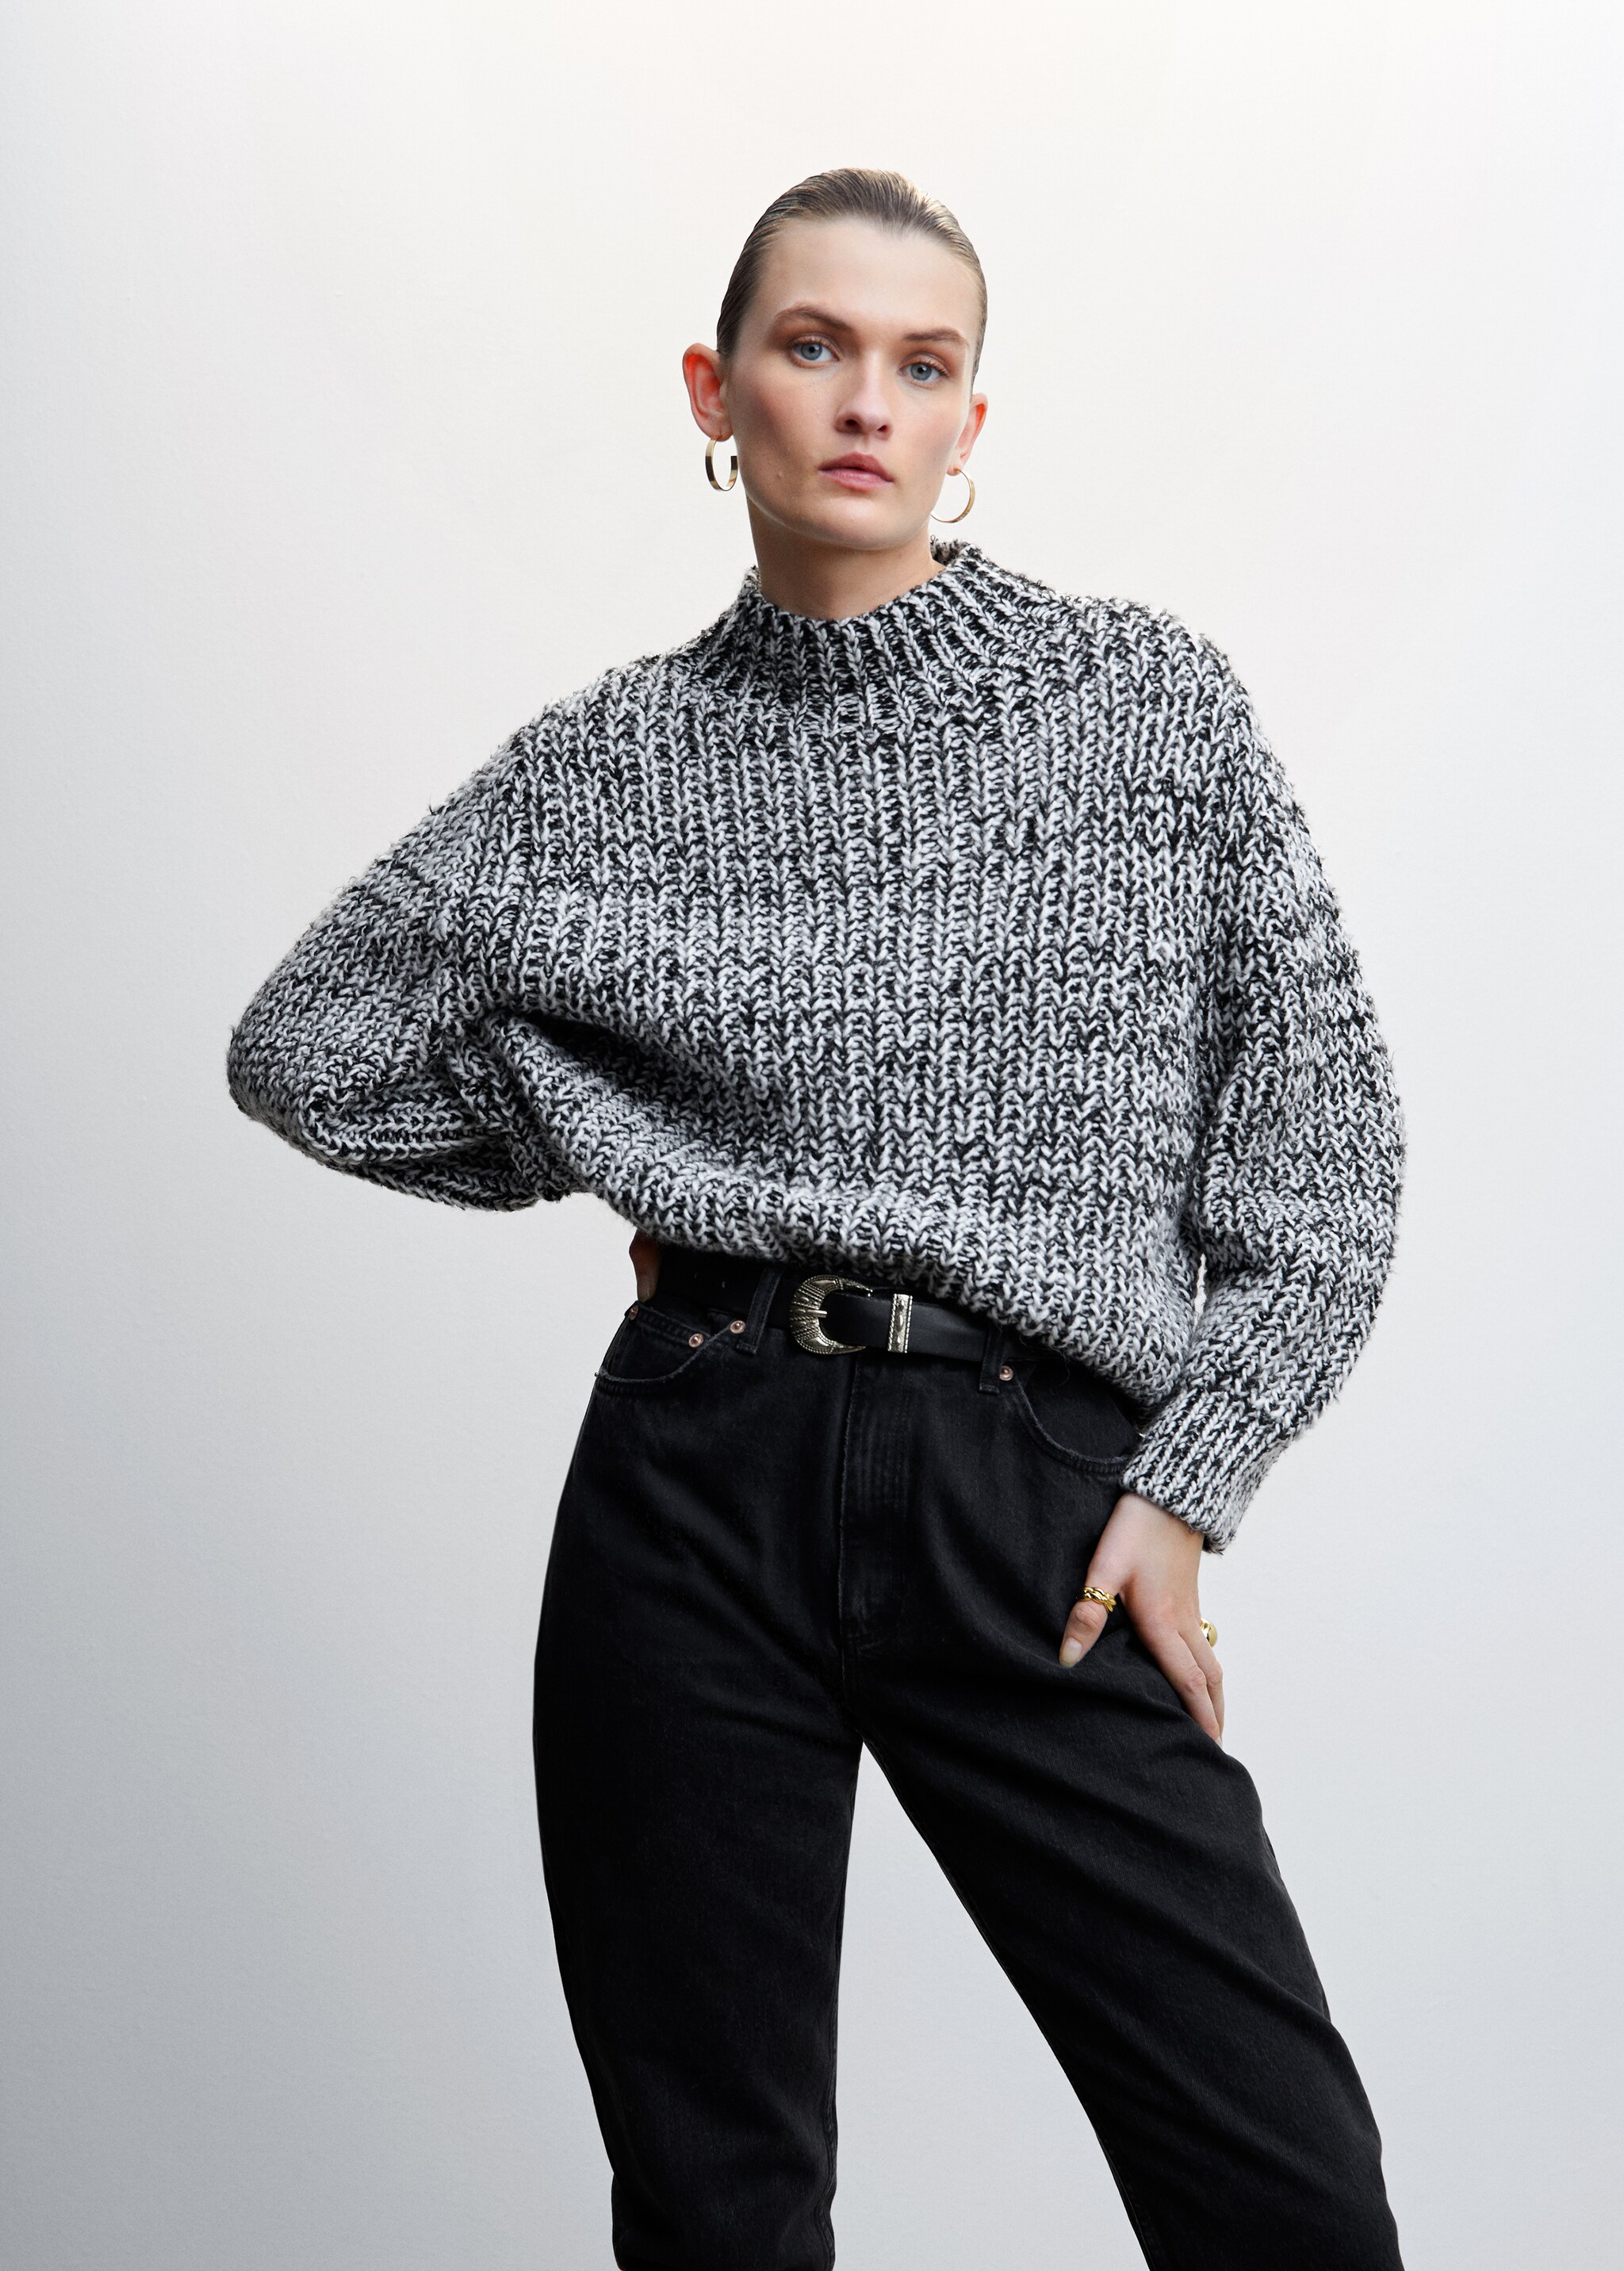 Knitted braided sweater - Medium plane